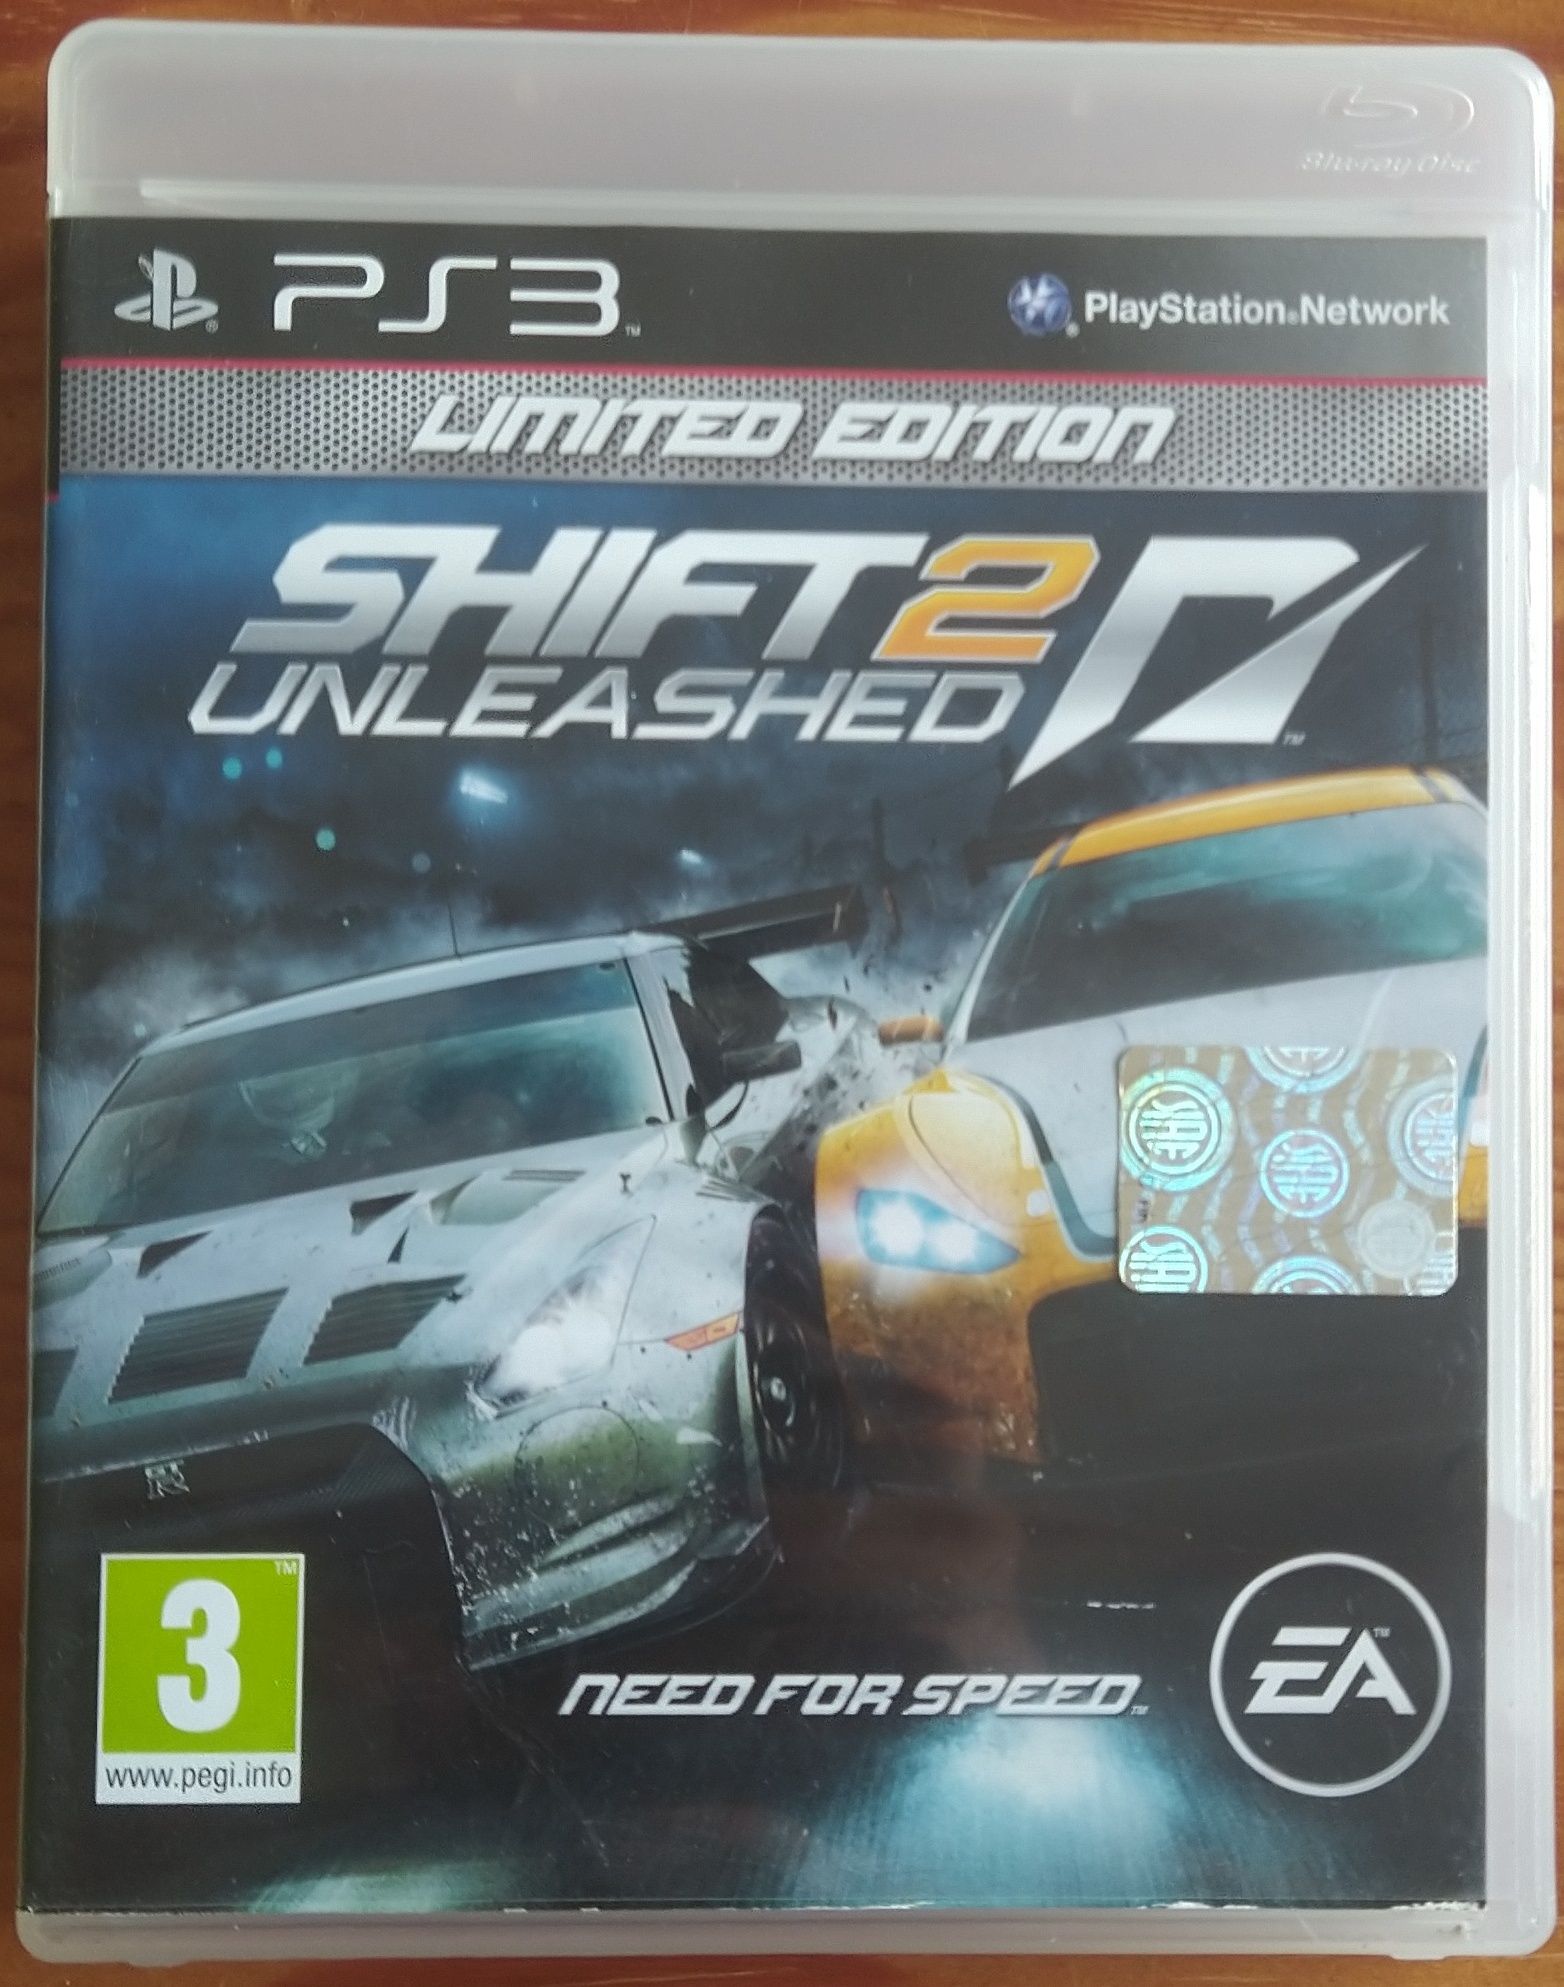 Need for Speed Shift Unleashed 2 Edição Limitada PlayStation 3